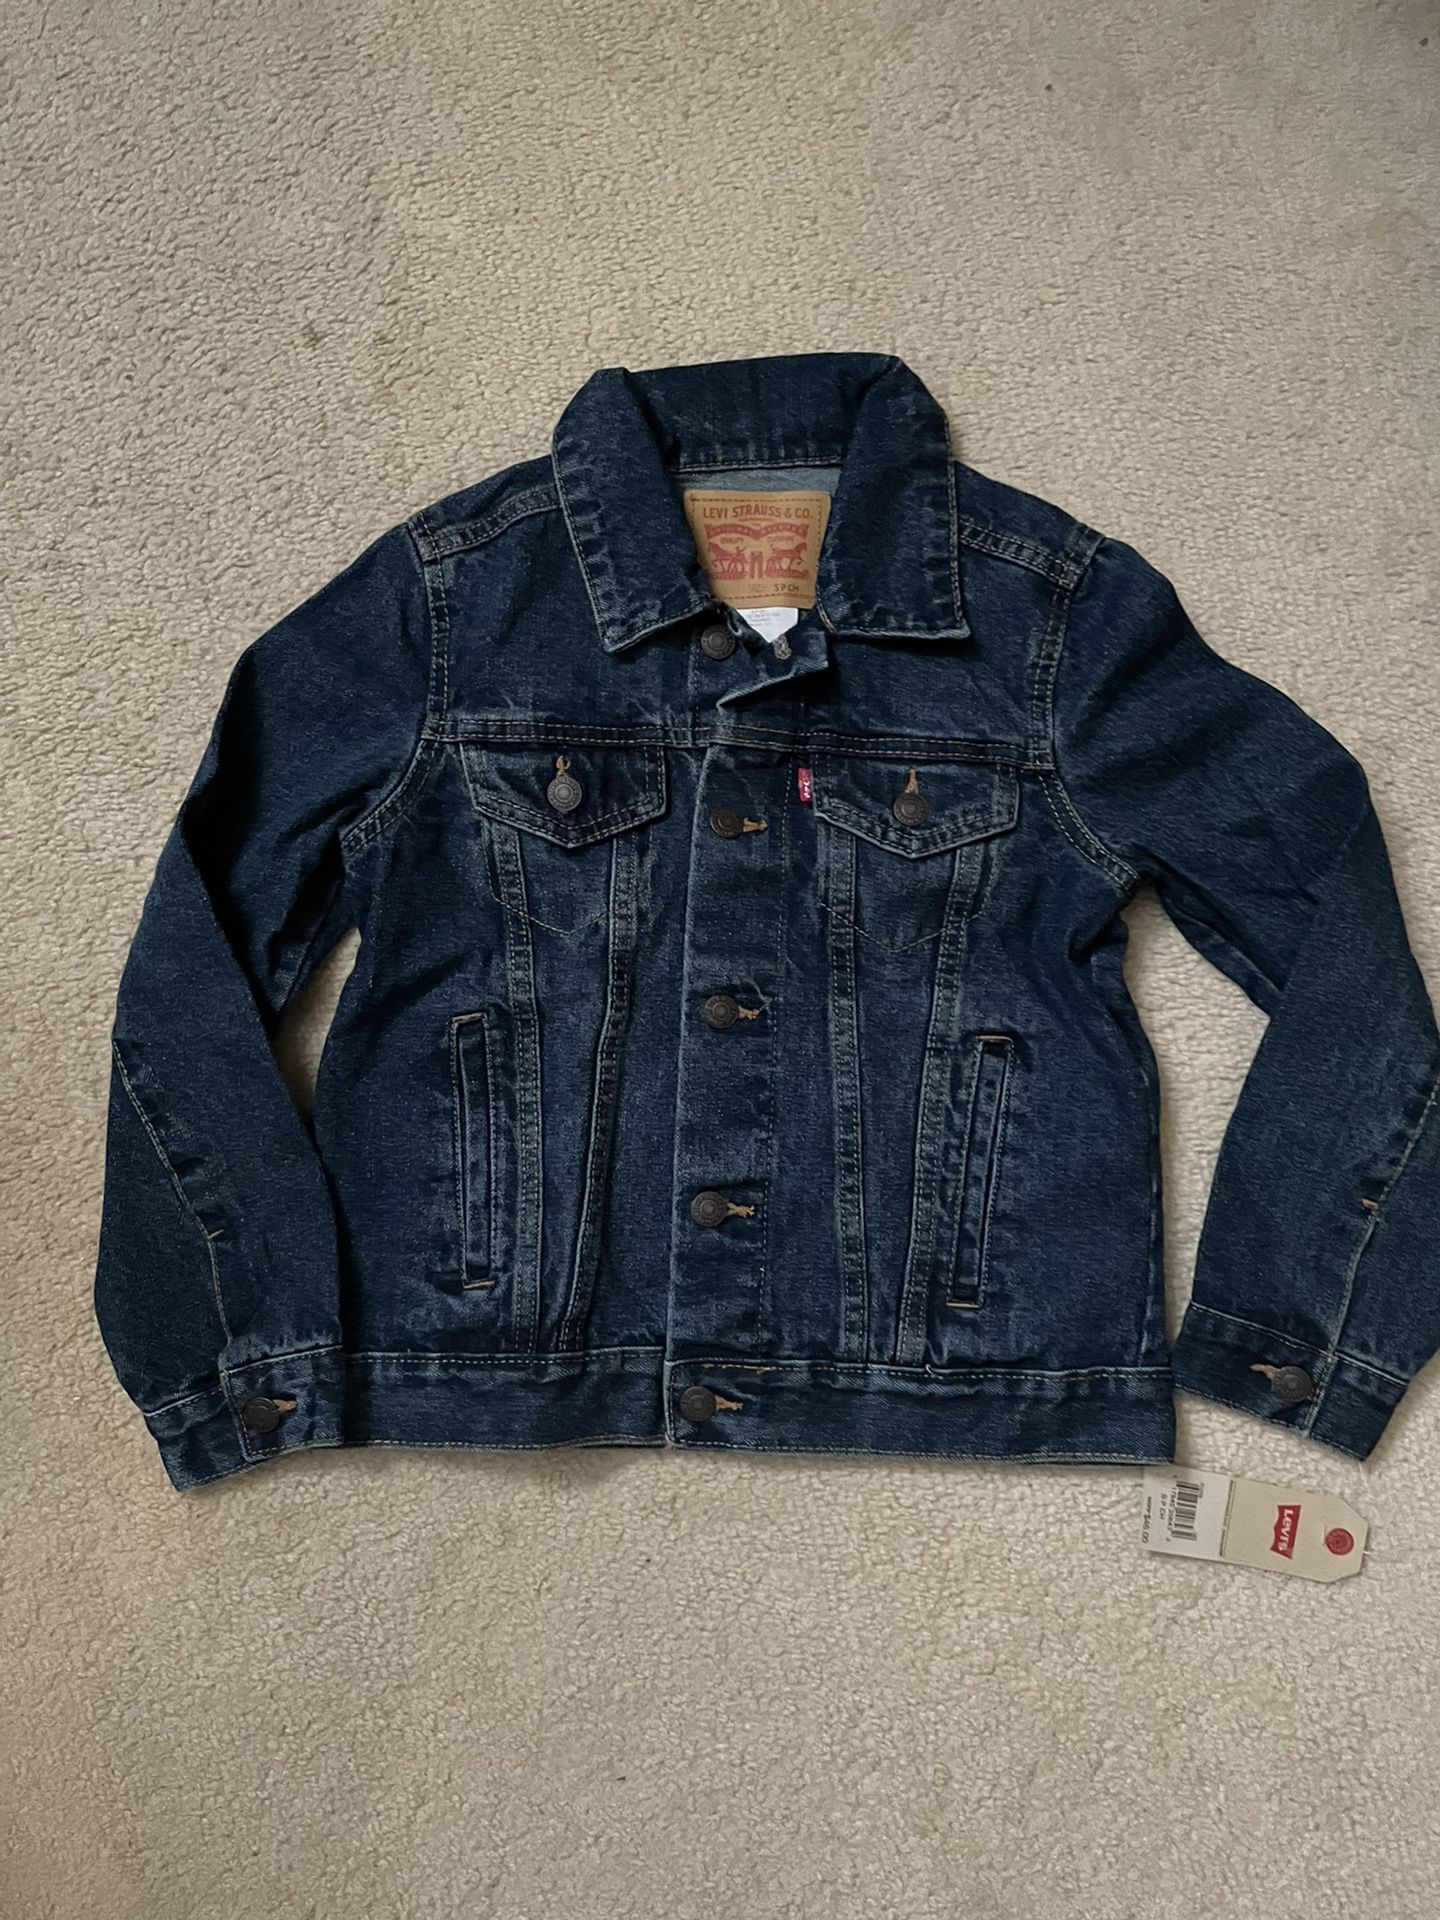 Boys Levi’s Jacket New Small 